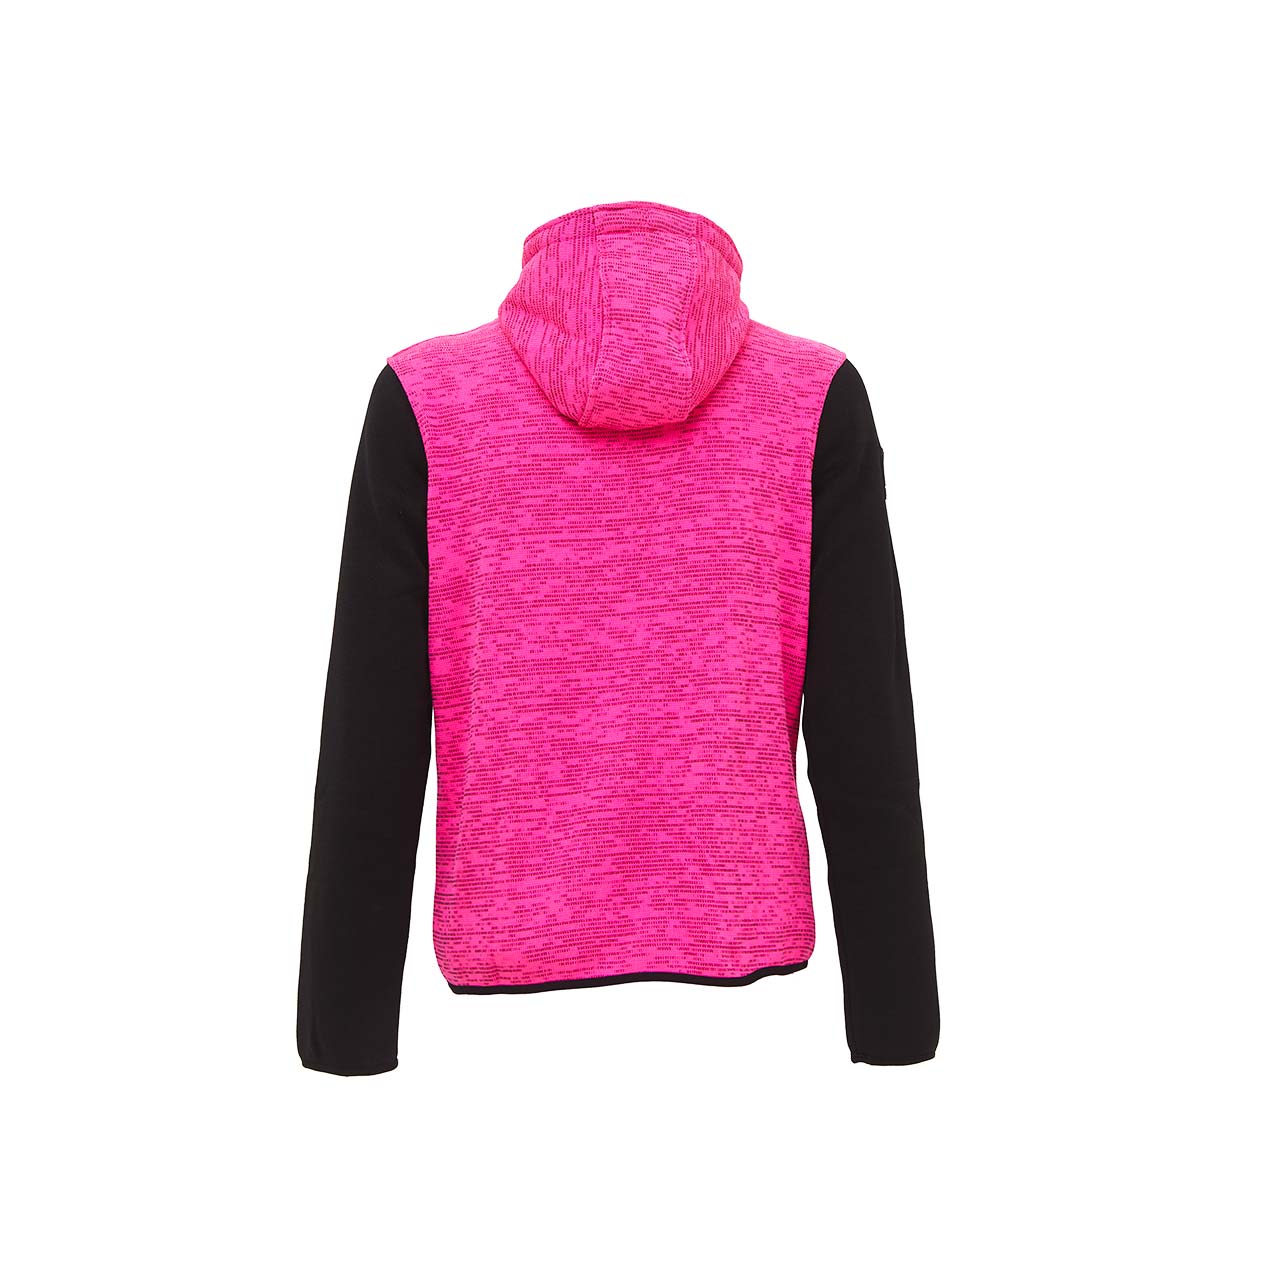 U-Power - Sweat-shirt zippé rose pour femmes RAINBOW - Rose - XL 4